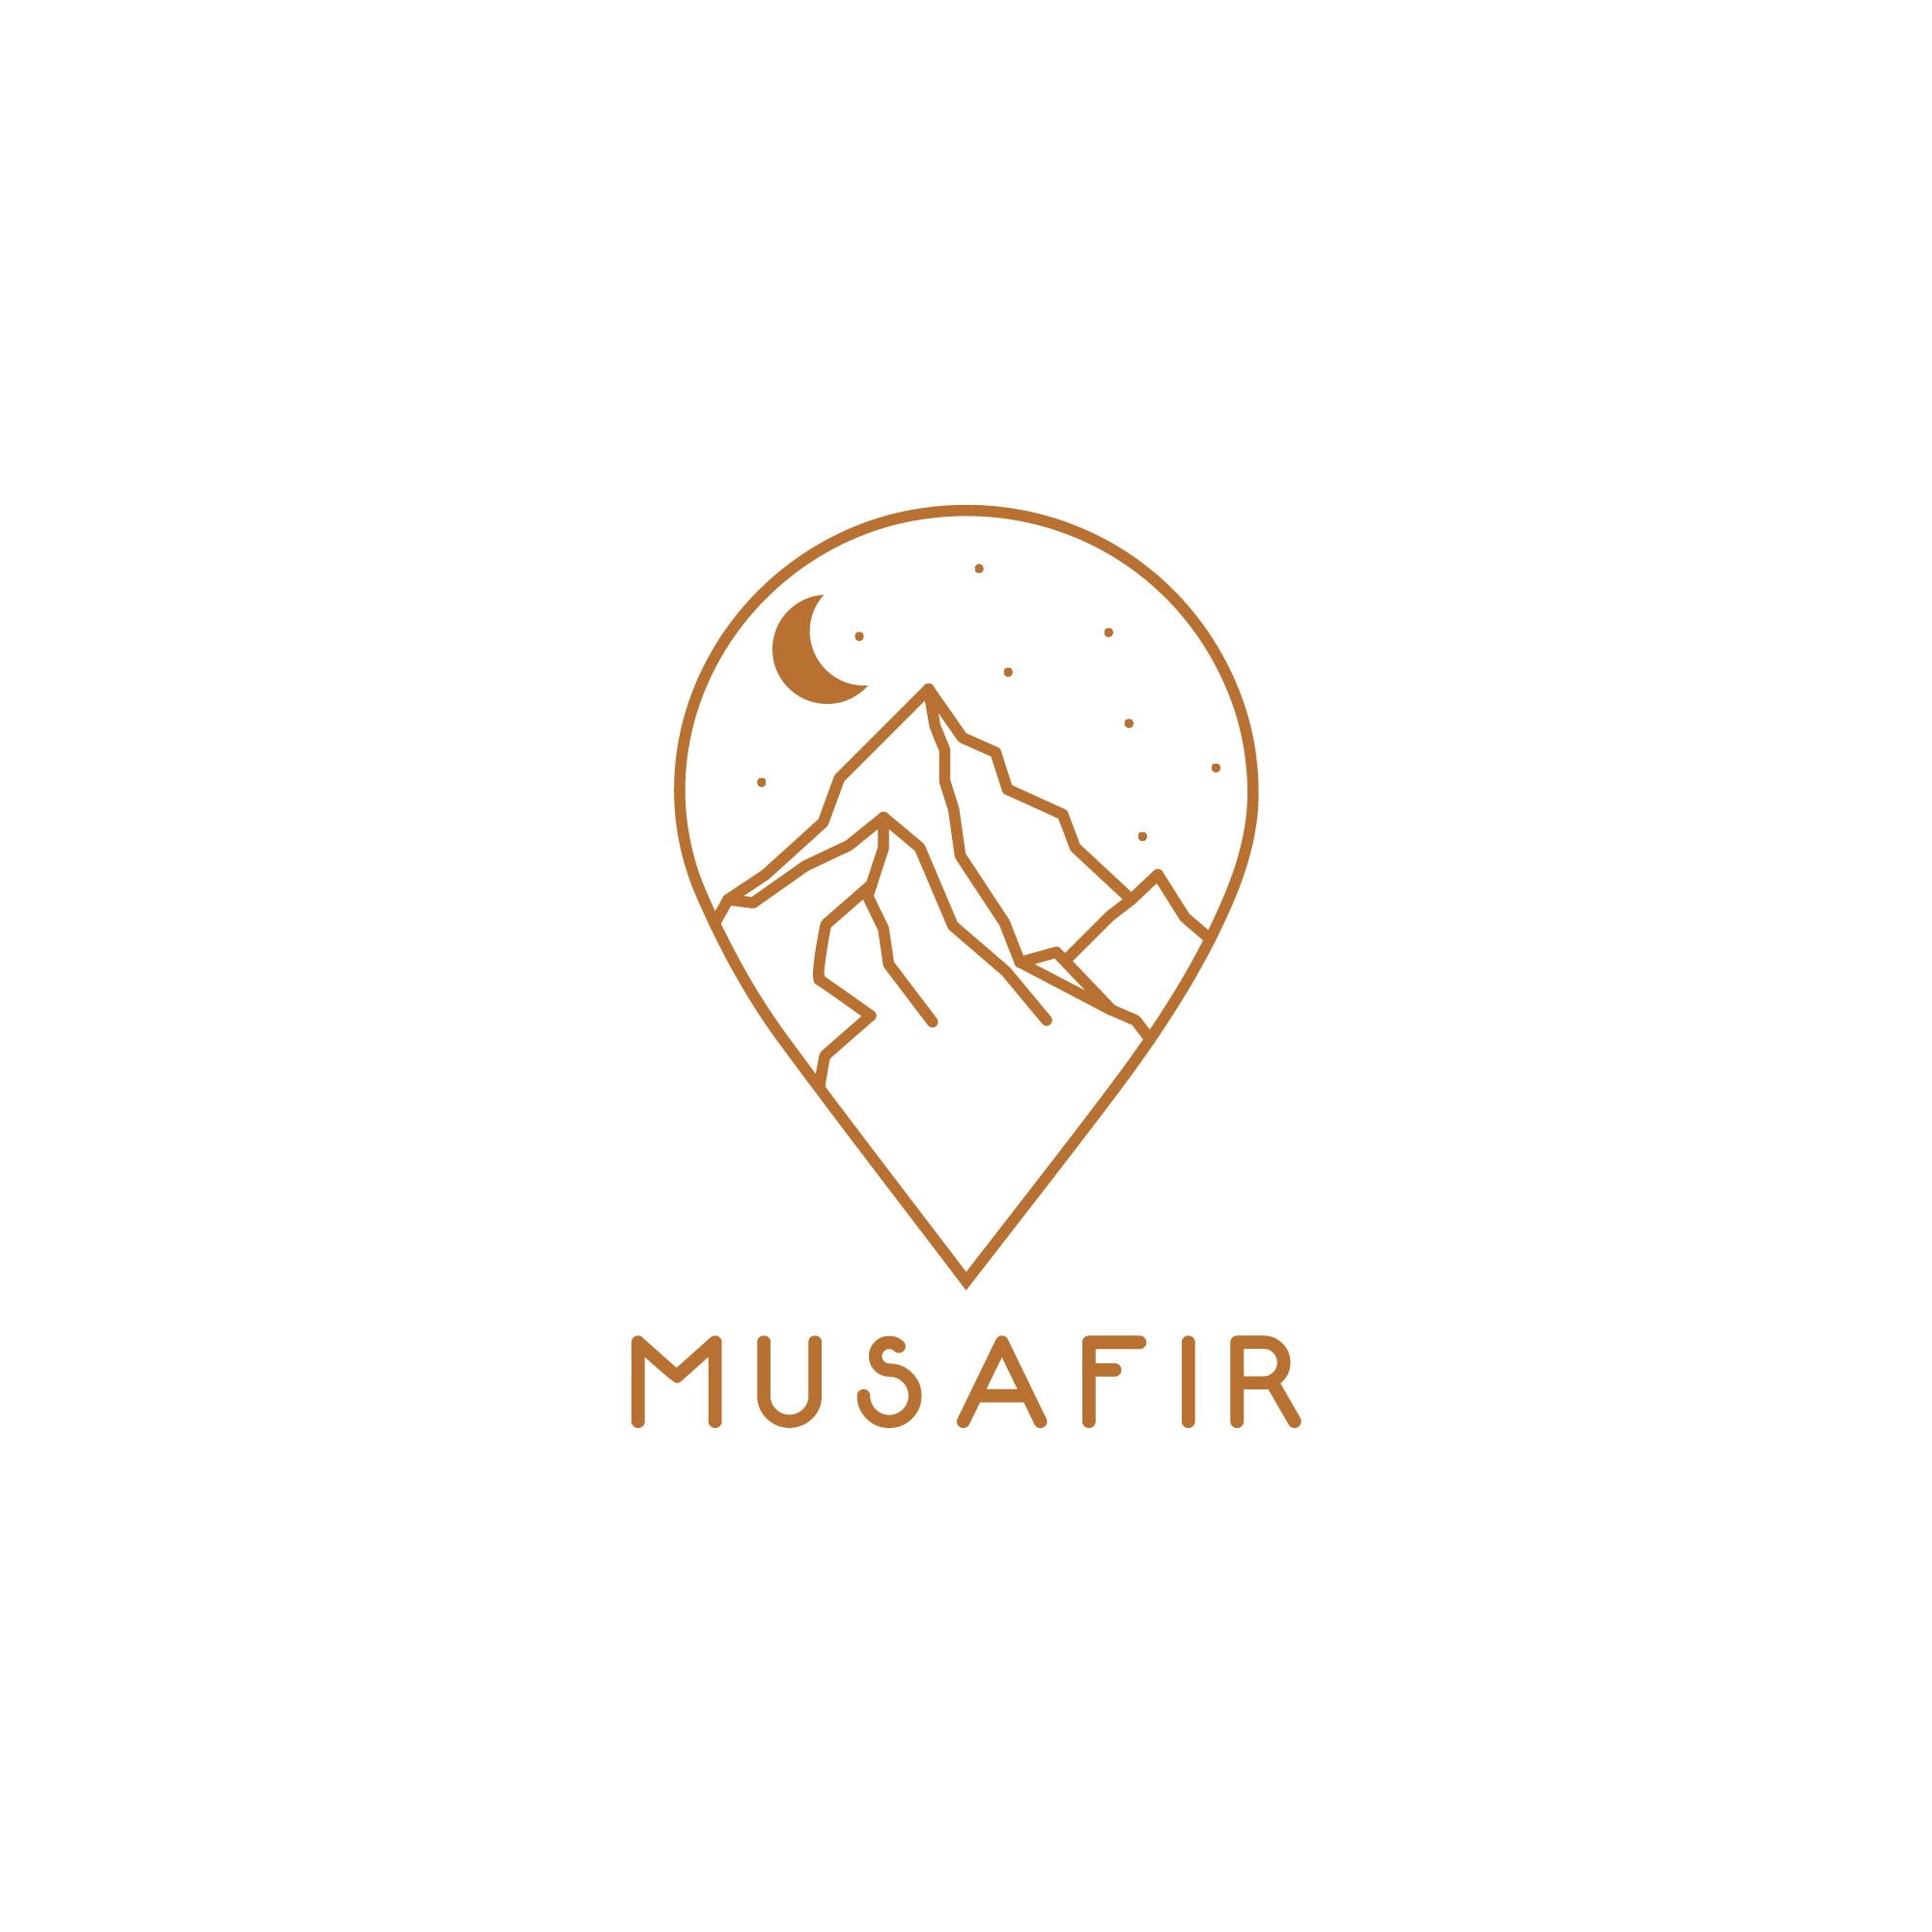 Musafir/Traveler